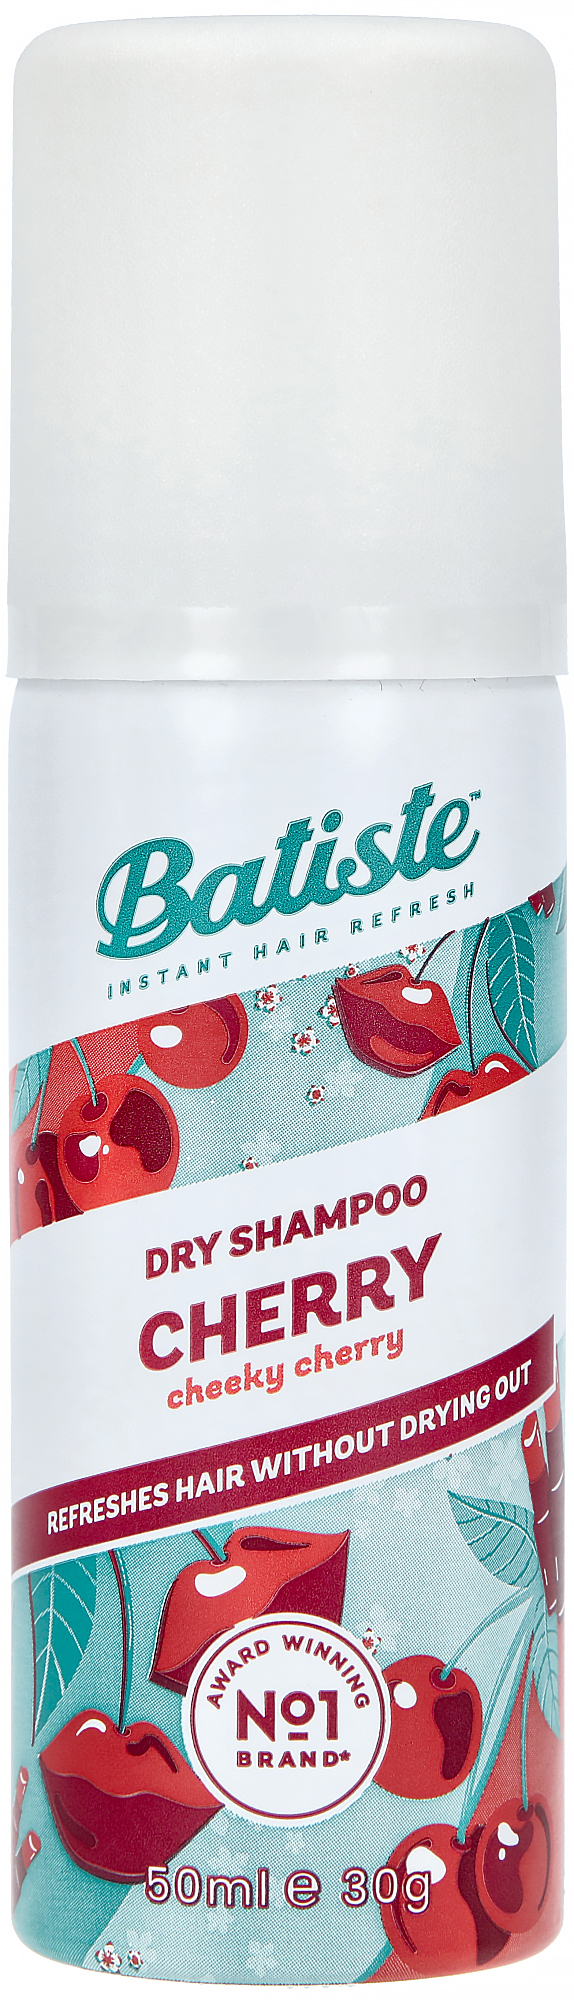 Batiste Dry Shampoo Cherry 50ml